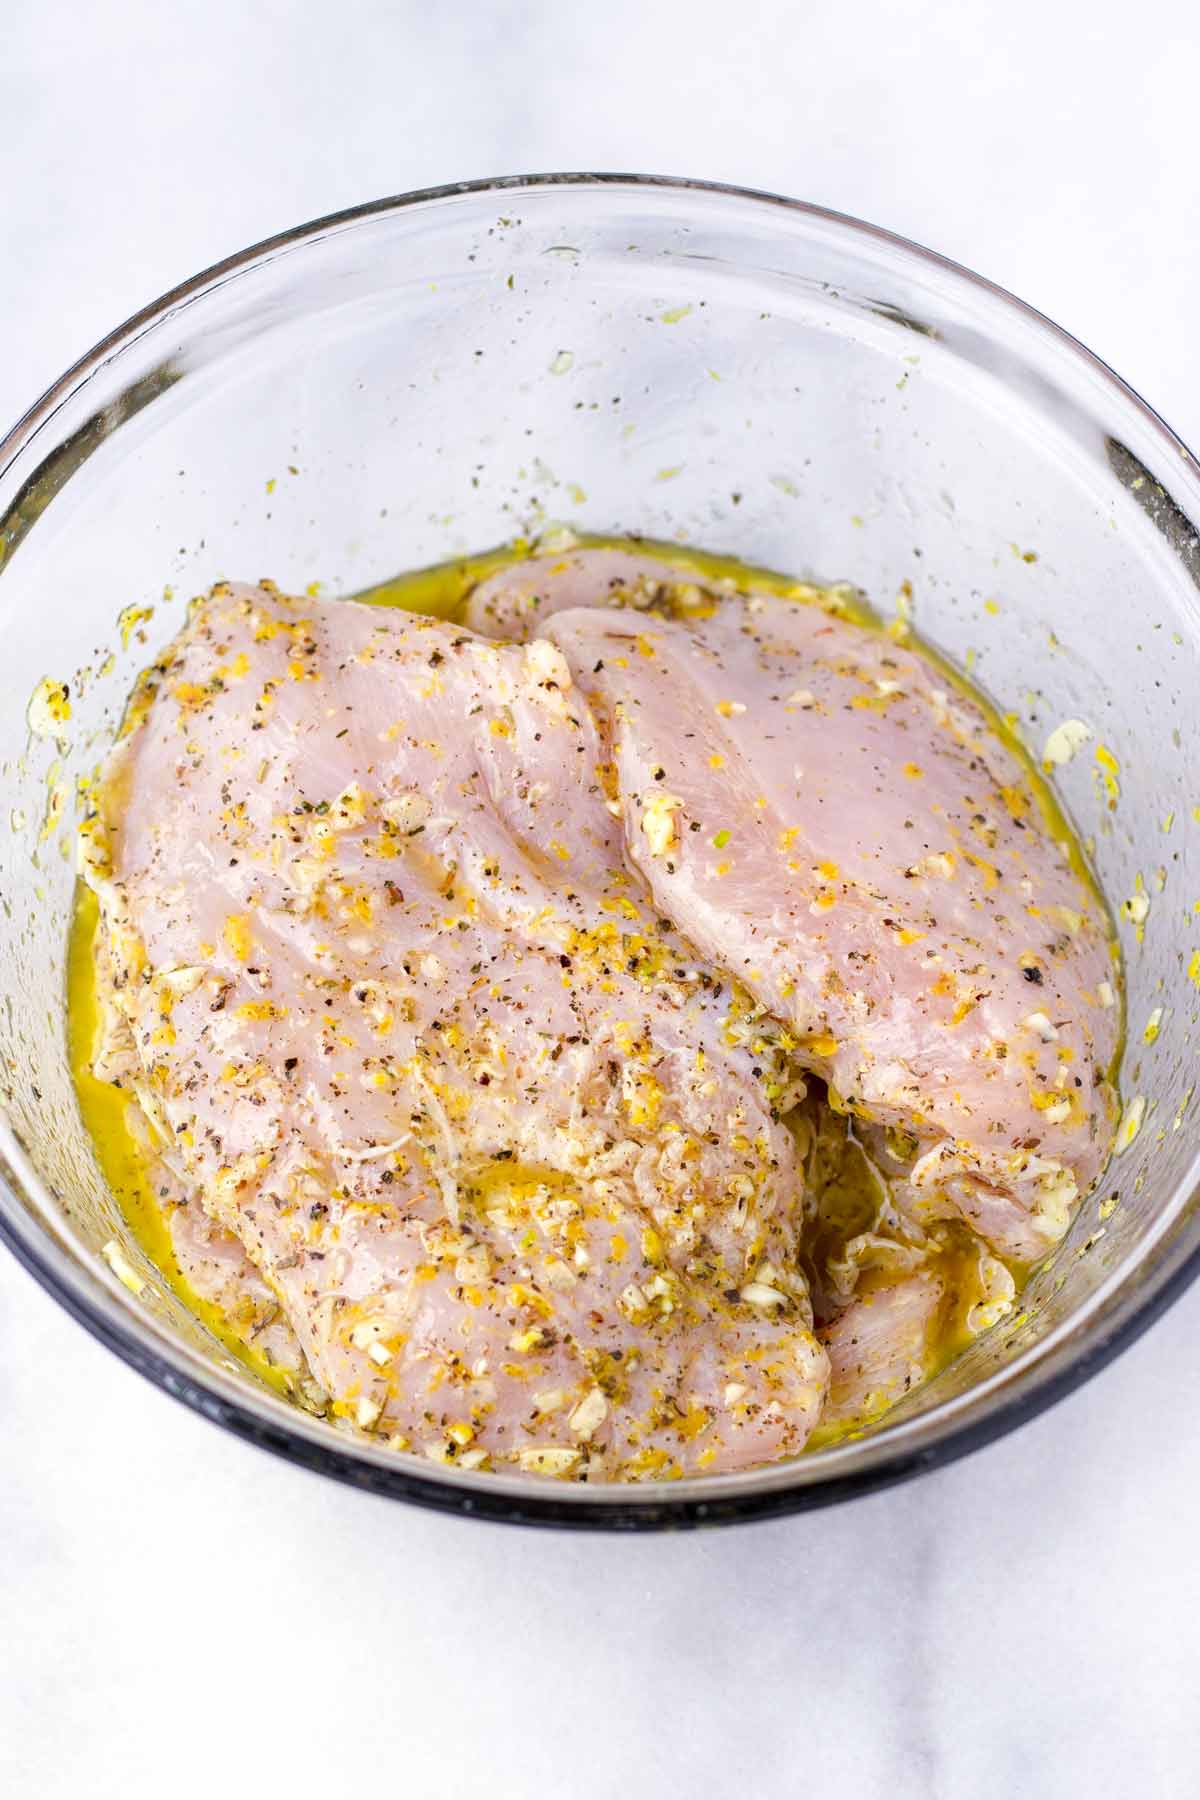 raw chicken breasts sitting in a lemon garlic marinade in a glass bowl